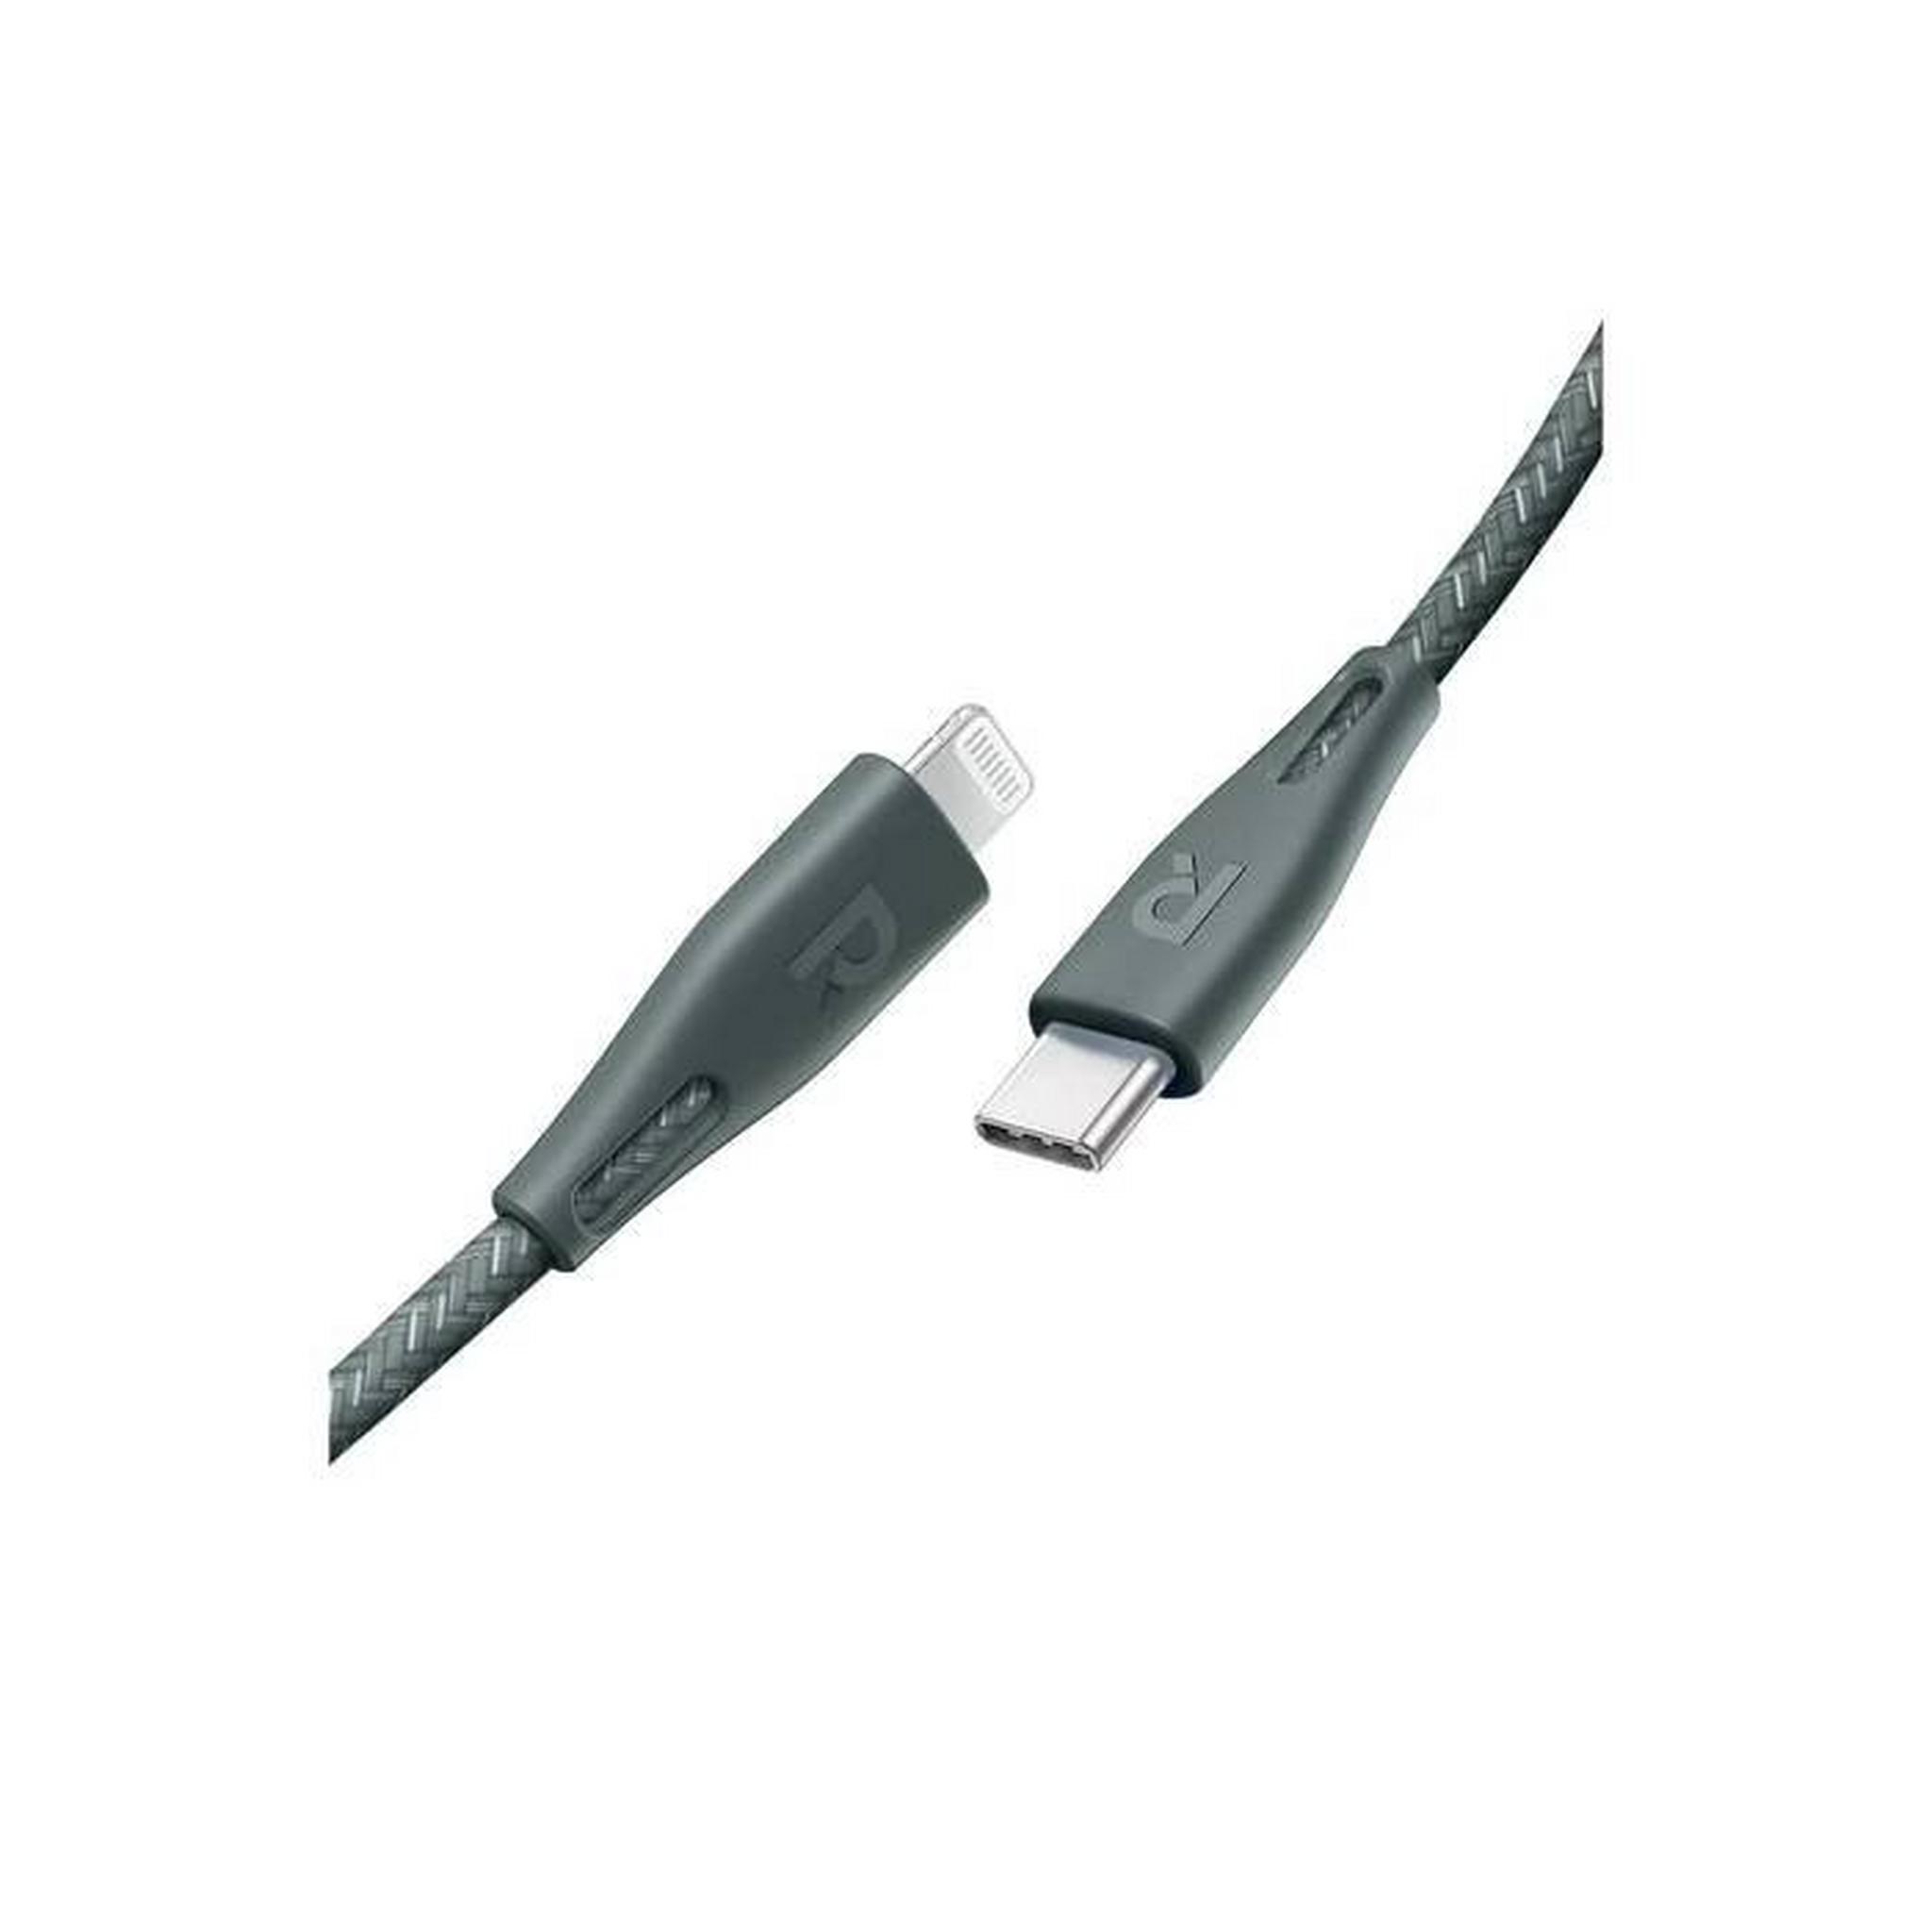 RAVPower Type-C To Lightning Cable 1.2m Nylon, RP-CB1017 - Grey